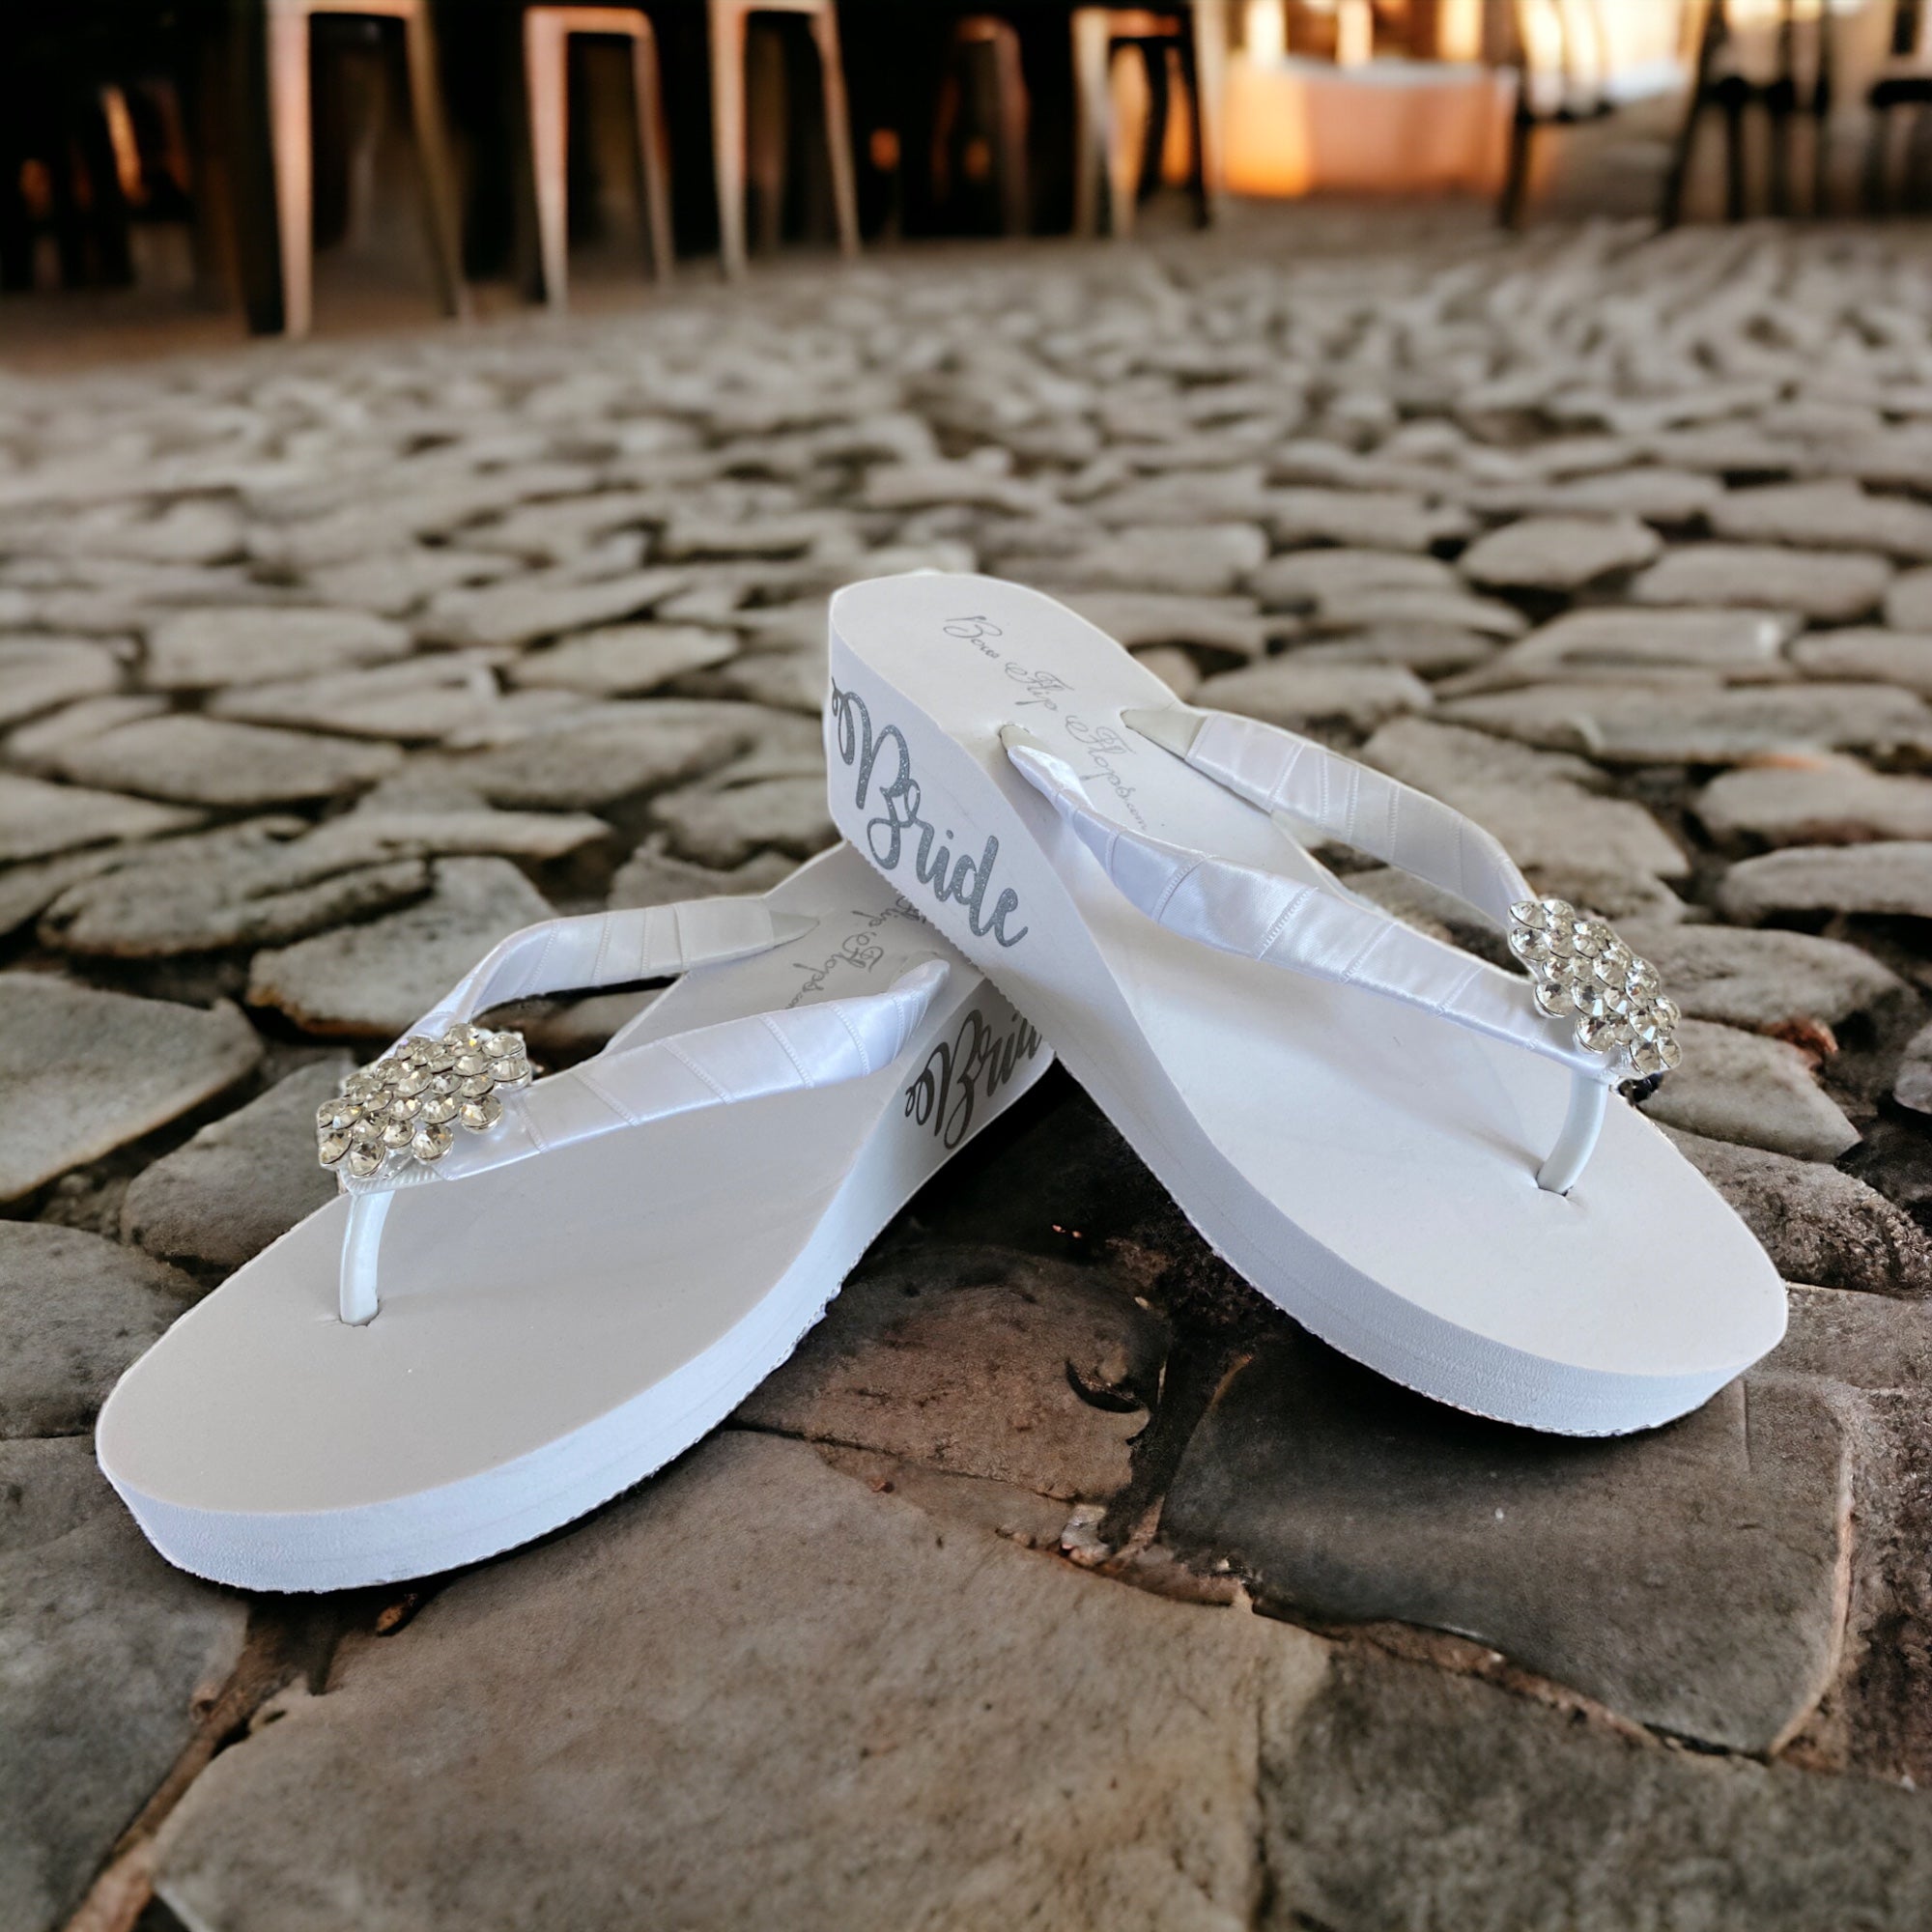 Bride Wedge Heel 2 Inch Flip Flops with Rhinestone Heart Embellishment